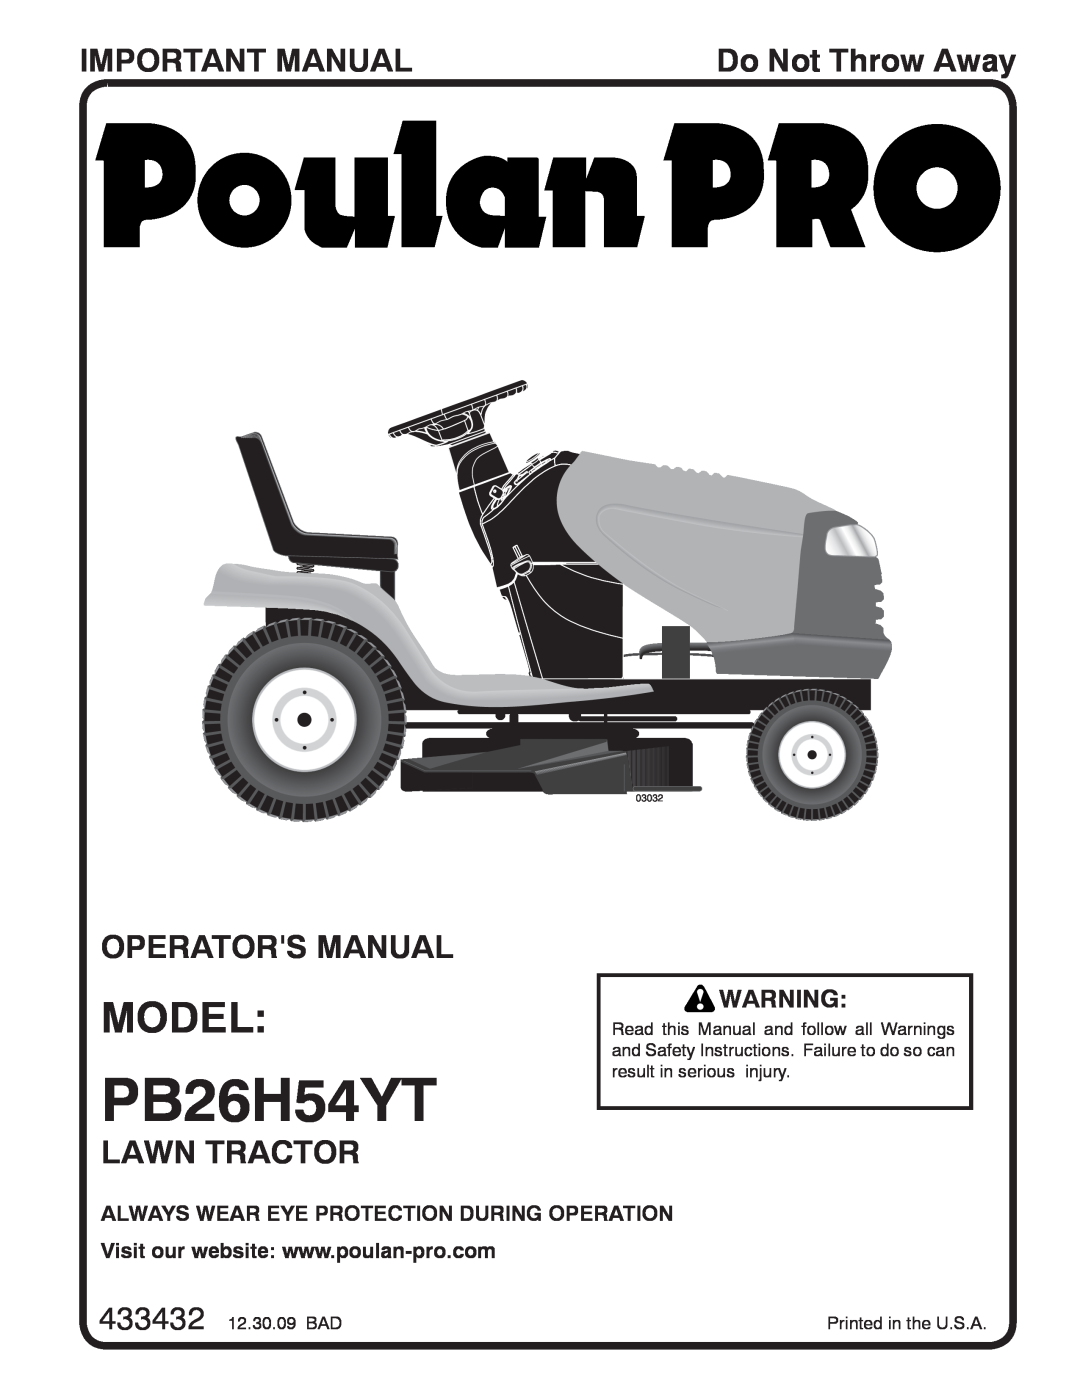 Poulan PB26H54YT, 96042011000 manual Important Manual, Operators Manual, Lawn Tractor, Model, Do Not Throw Away, 03032 